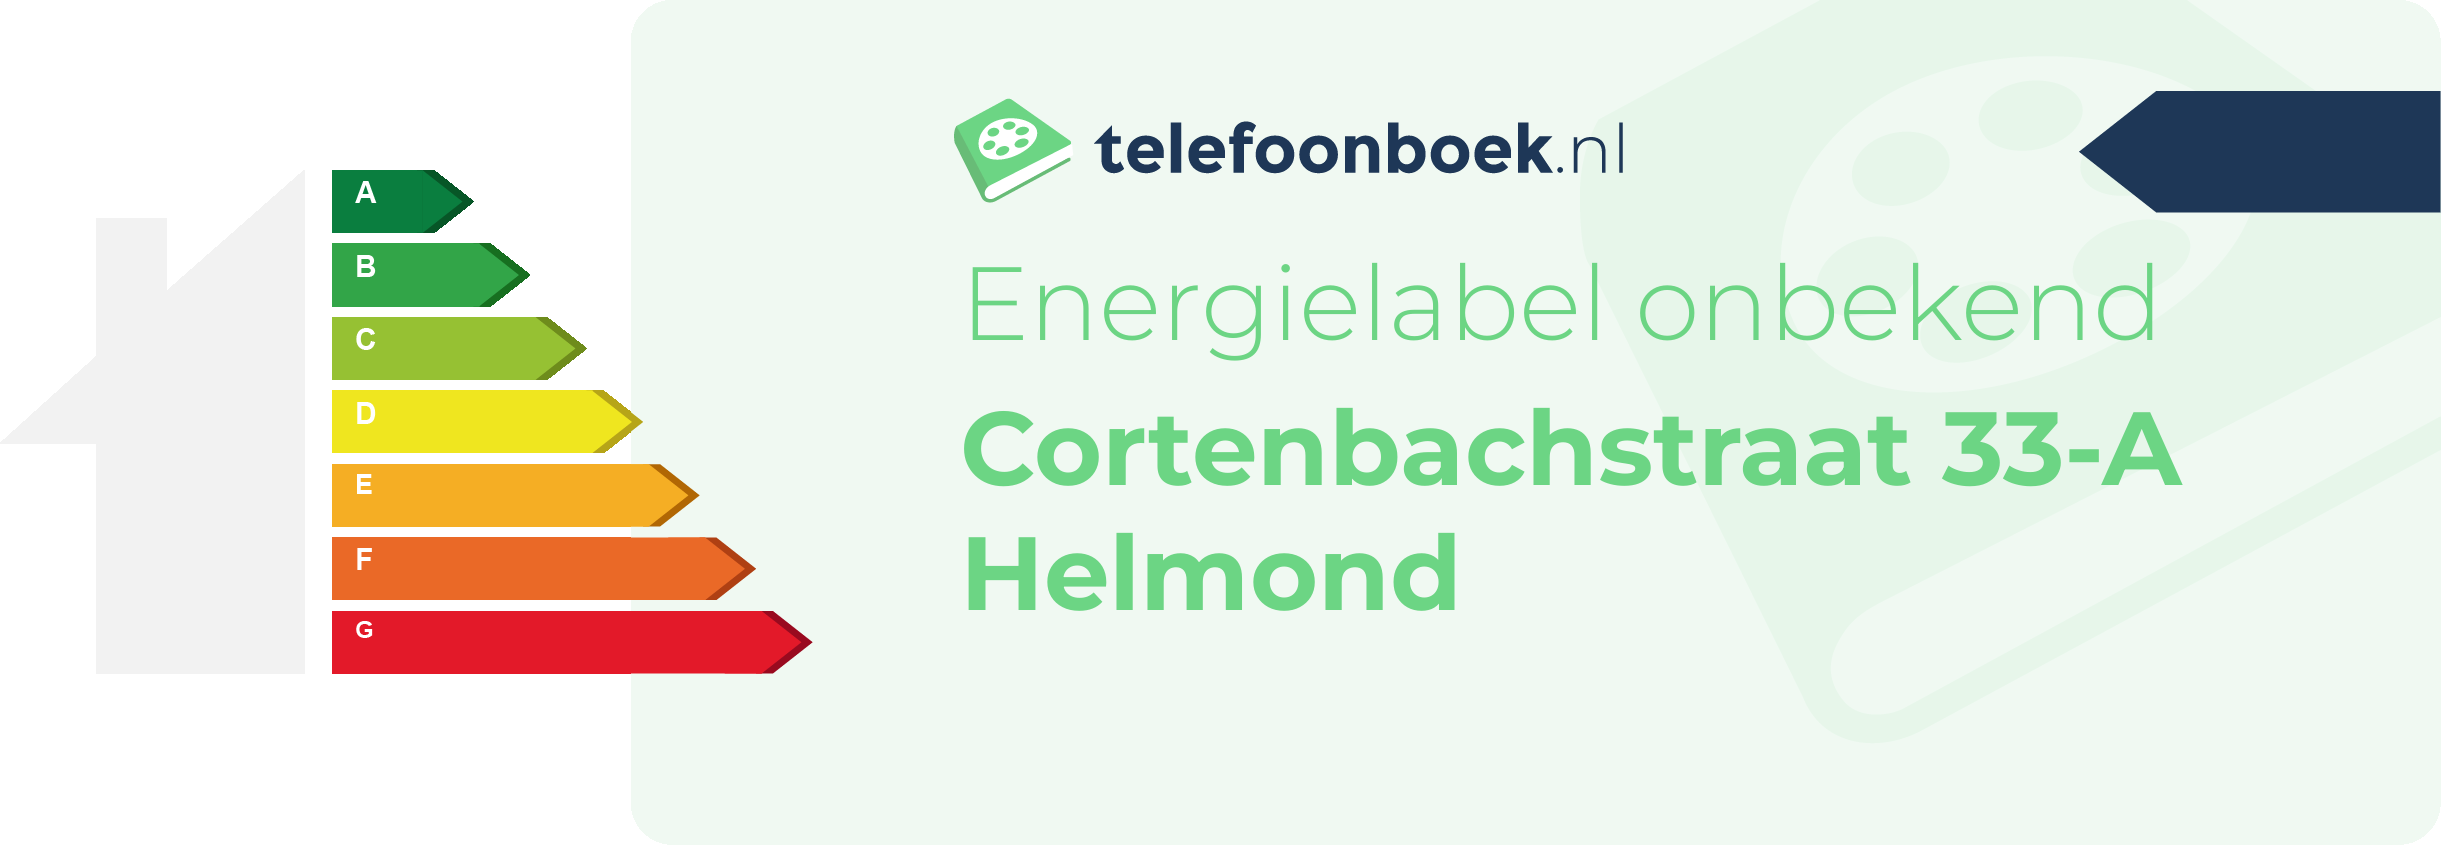 Energielabel Cortenbachstraat 33-A Helmond